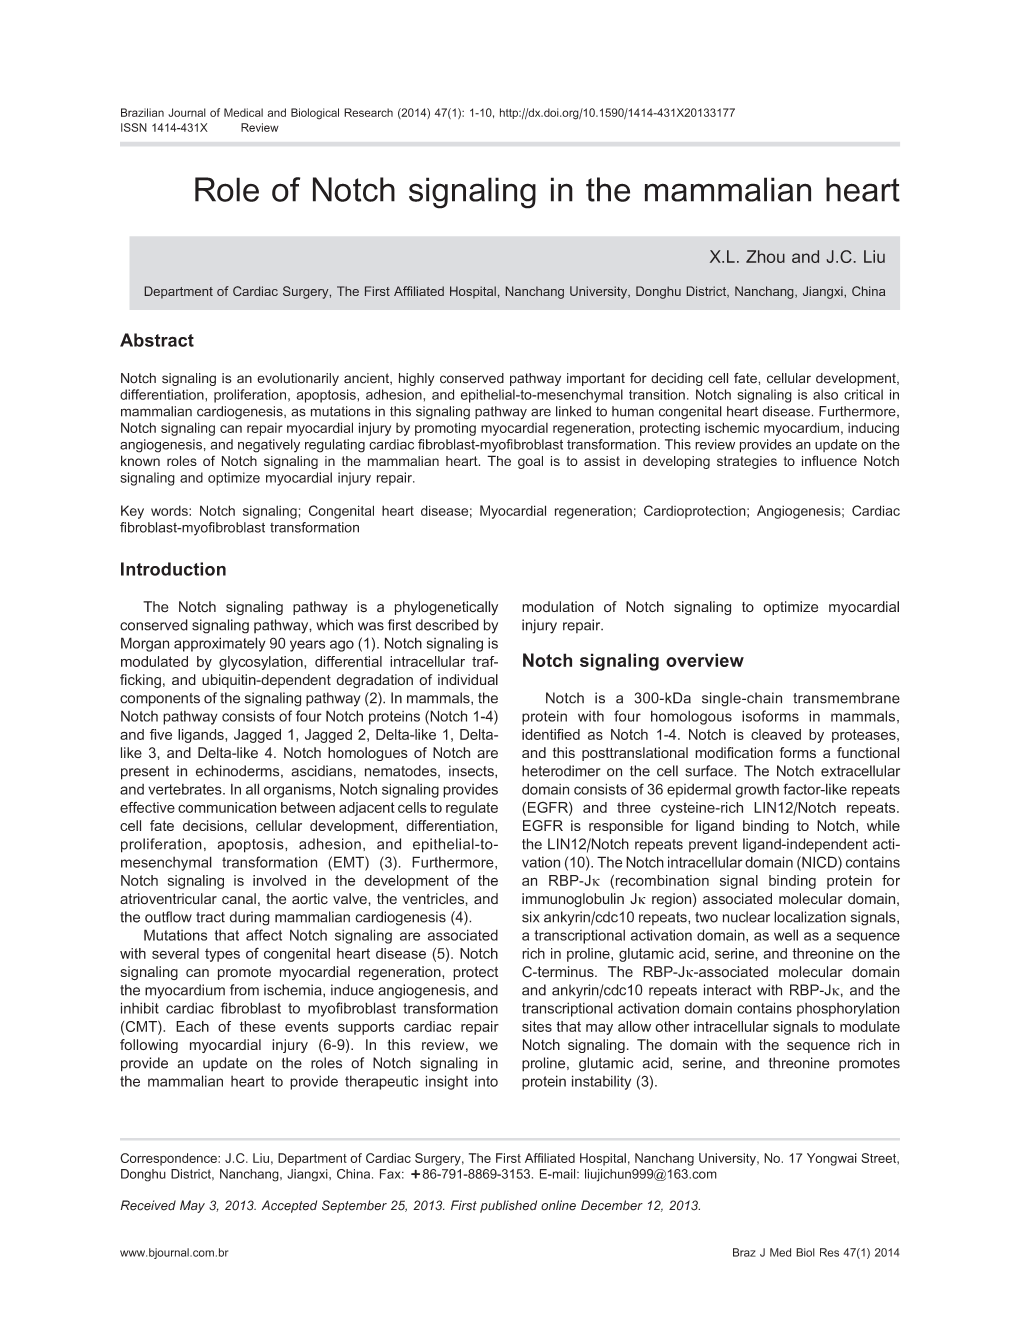 Role of Notch Signaling in the Mammalian Heart